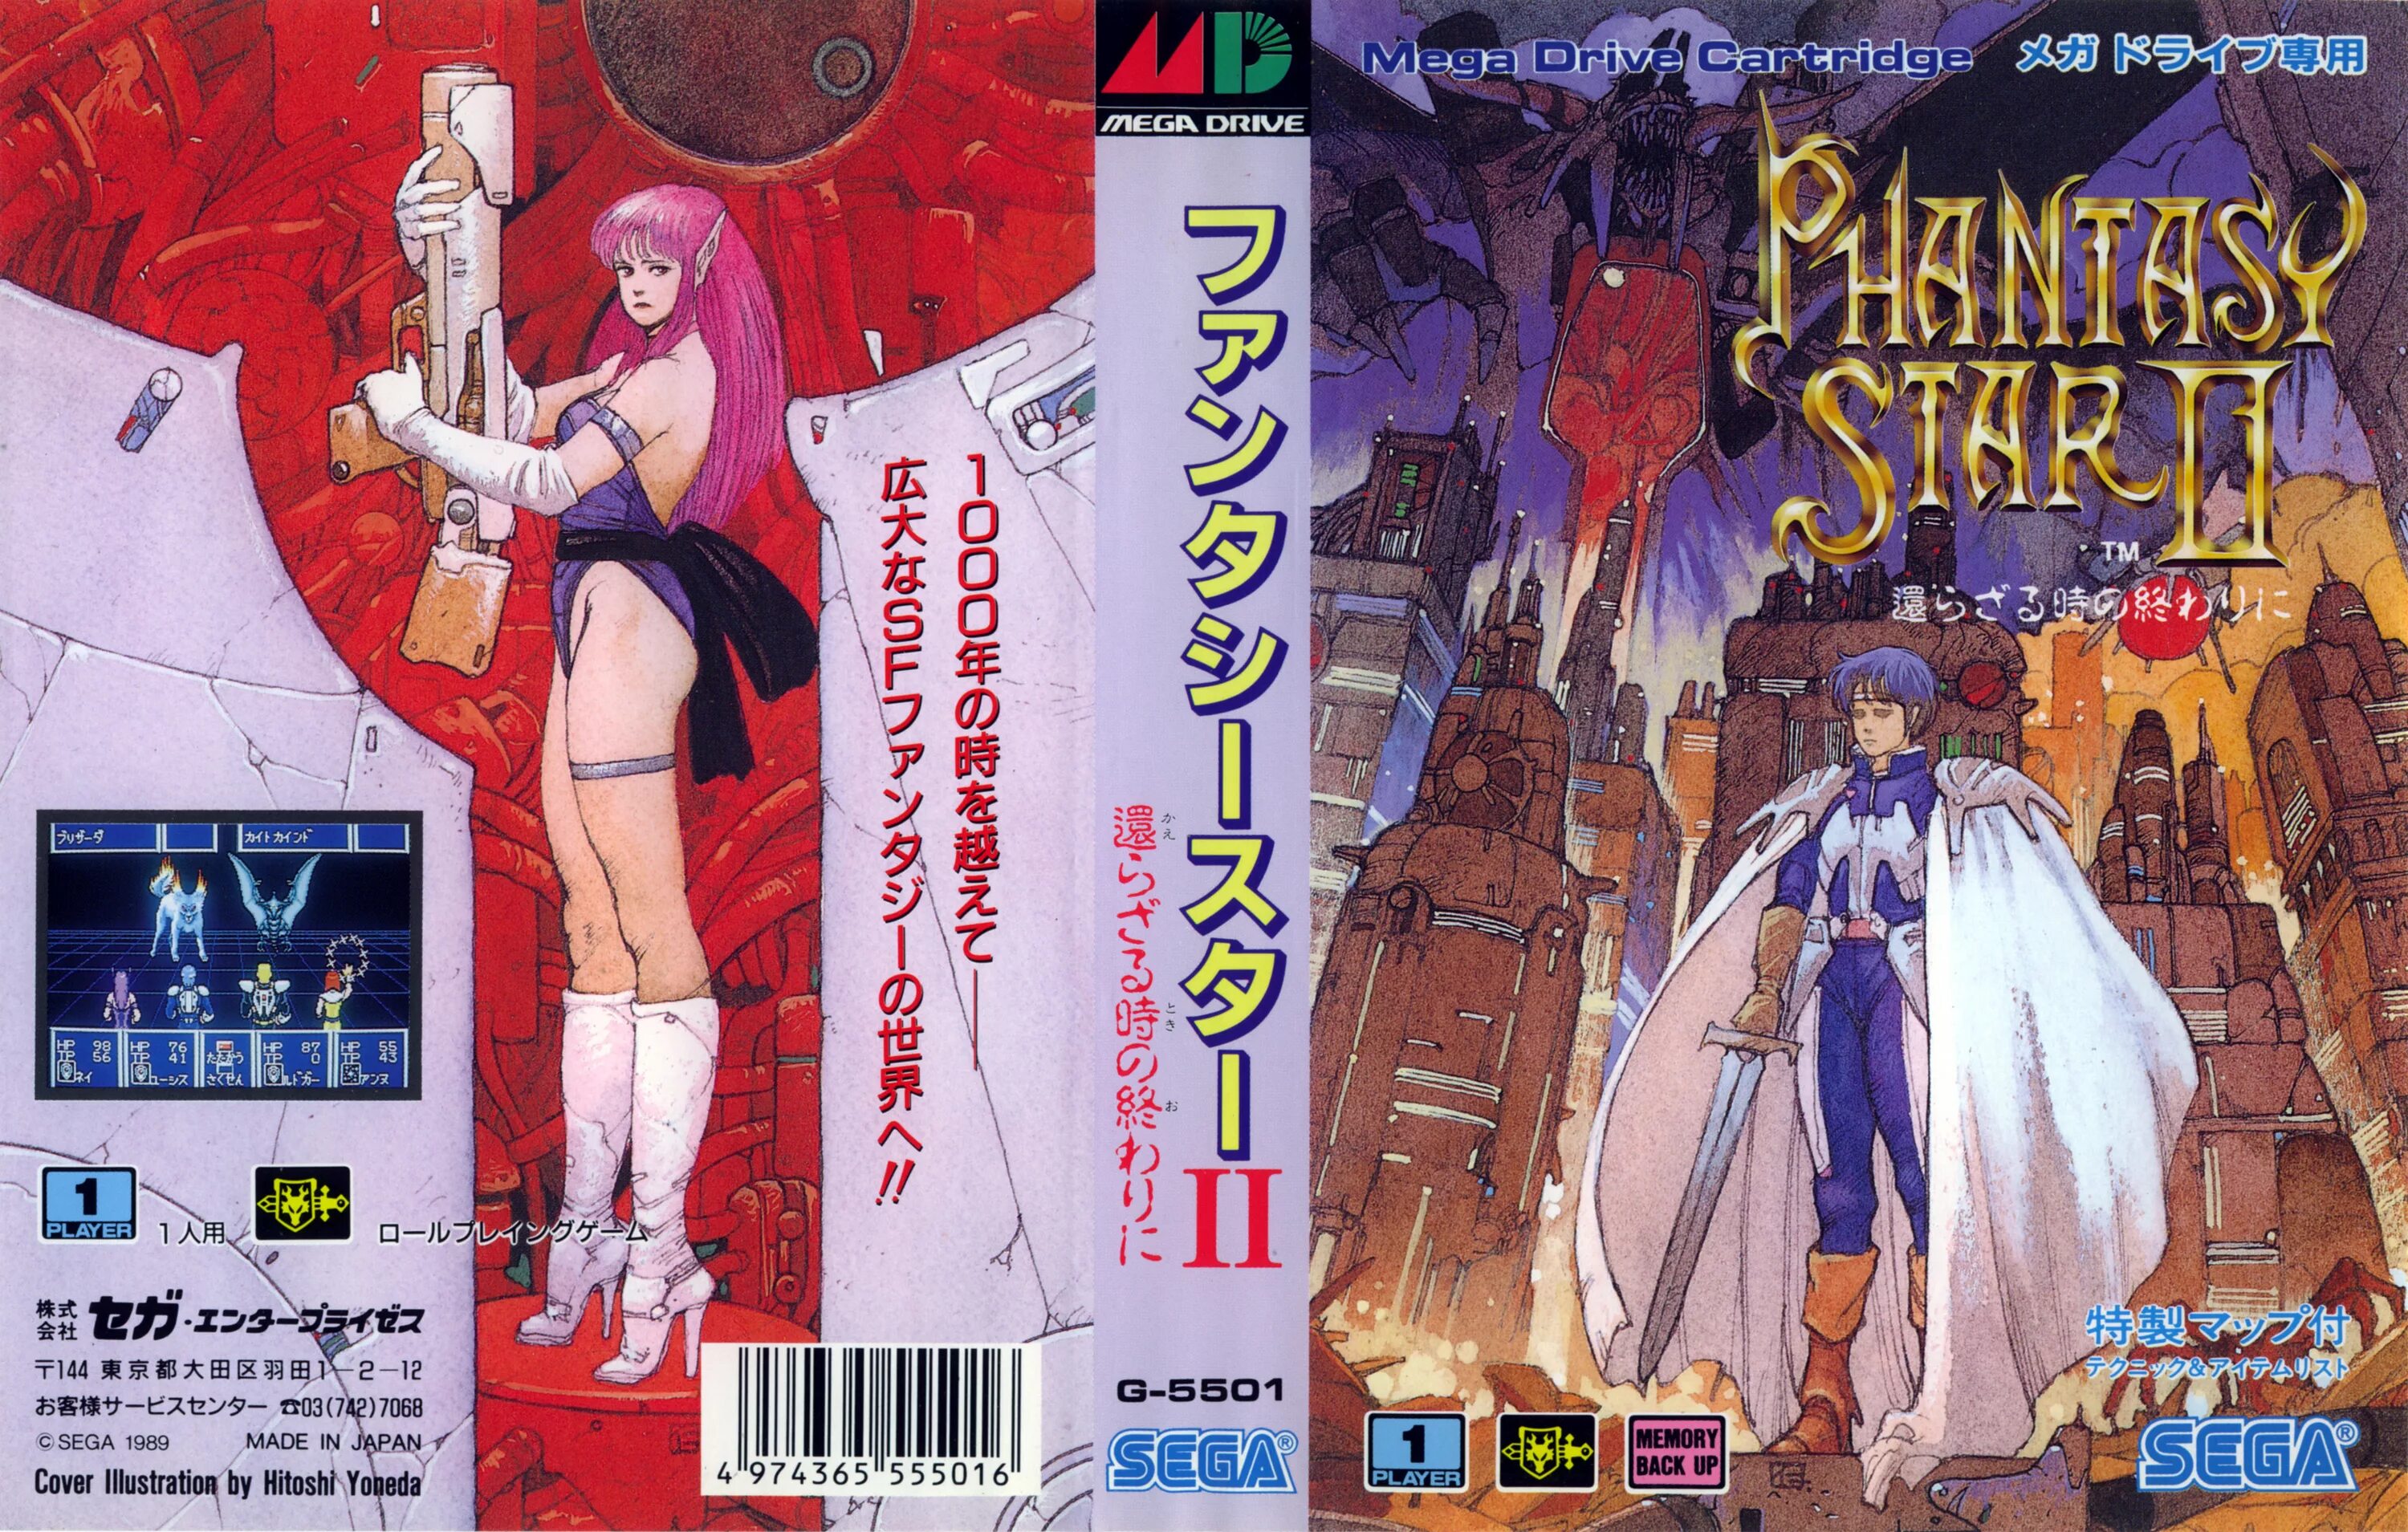 Phantasy Star 2 обложка. Phantasy Star 2 Sega обложка. Phantasy Star 4 обложка. Phantasy Star Sega Mega Drive.